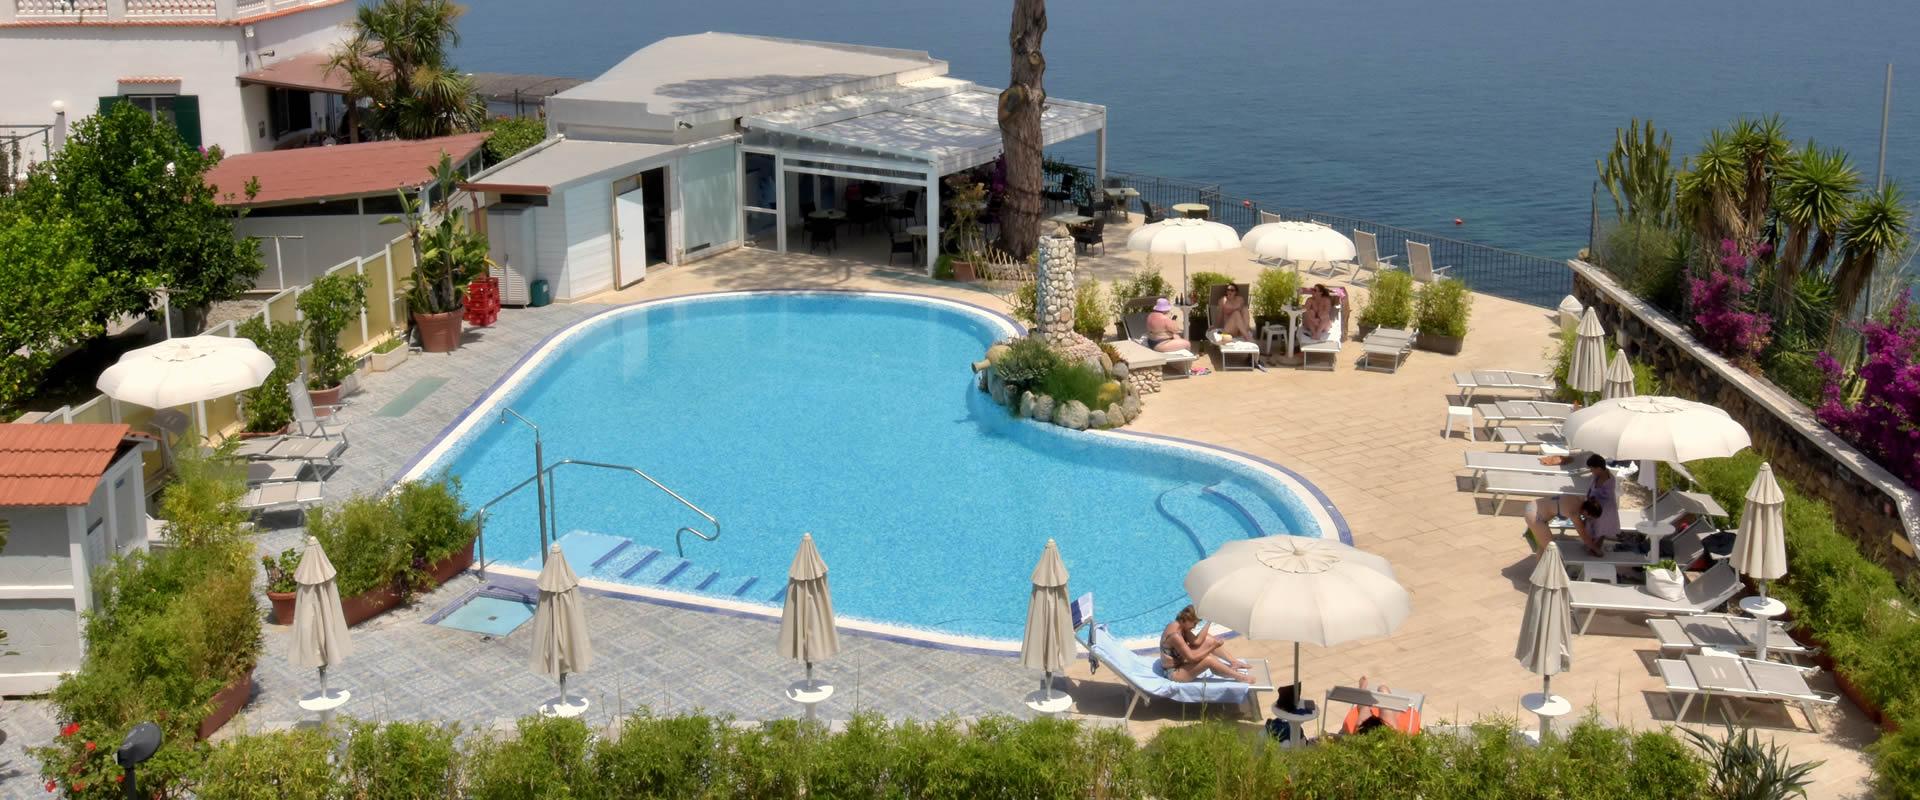 albergolapprodo it hotel-ischia-piscina-solarium-e-centro-benessere 003